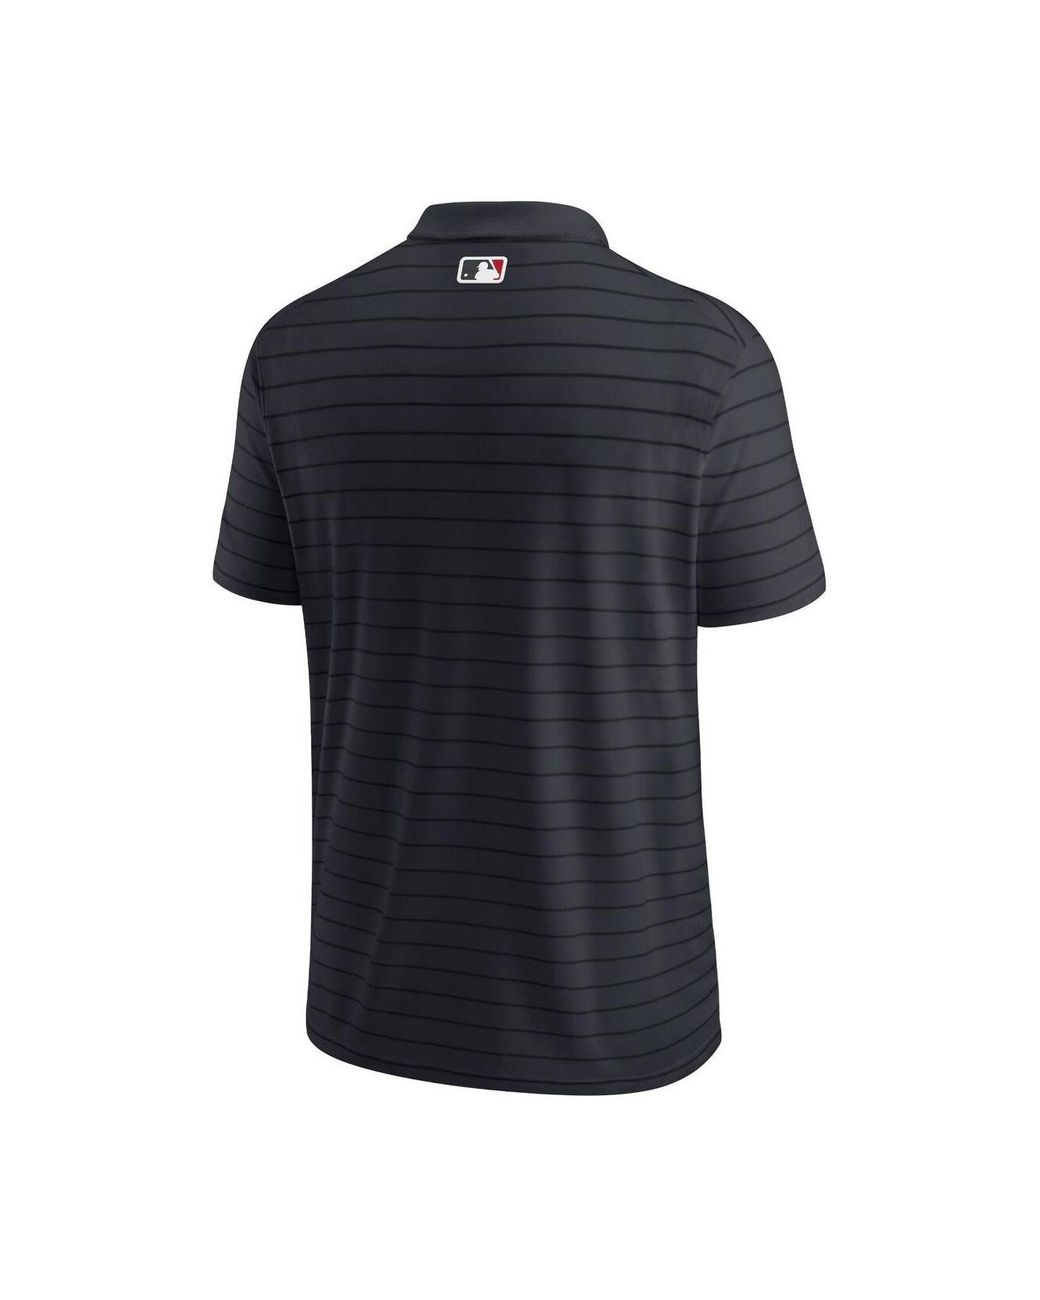 Pittsburgh Pirates Mens Striped Polo Shirt True Fan MLB Genuine Merchandise  NEW